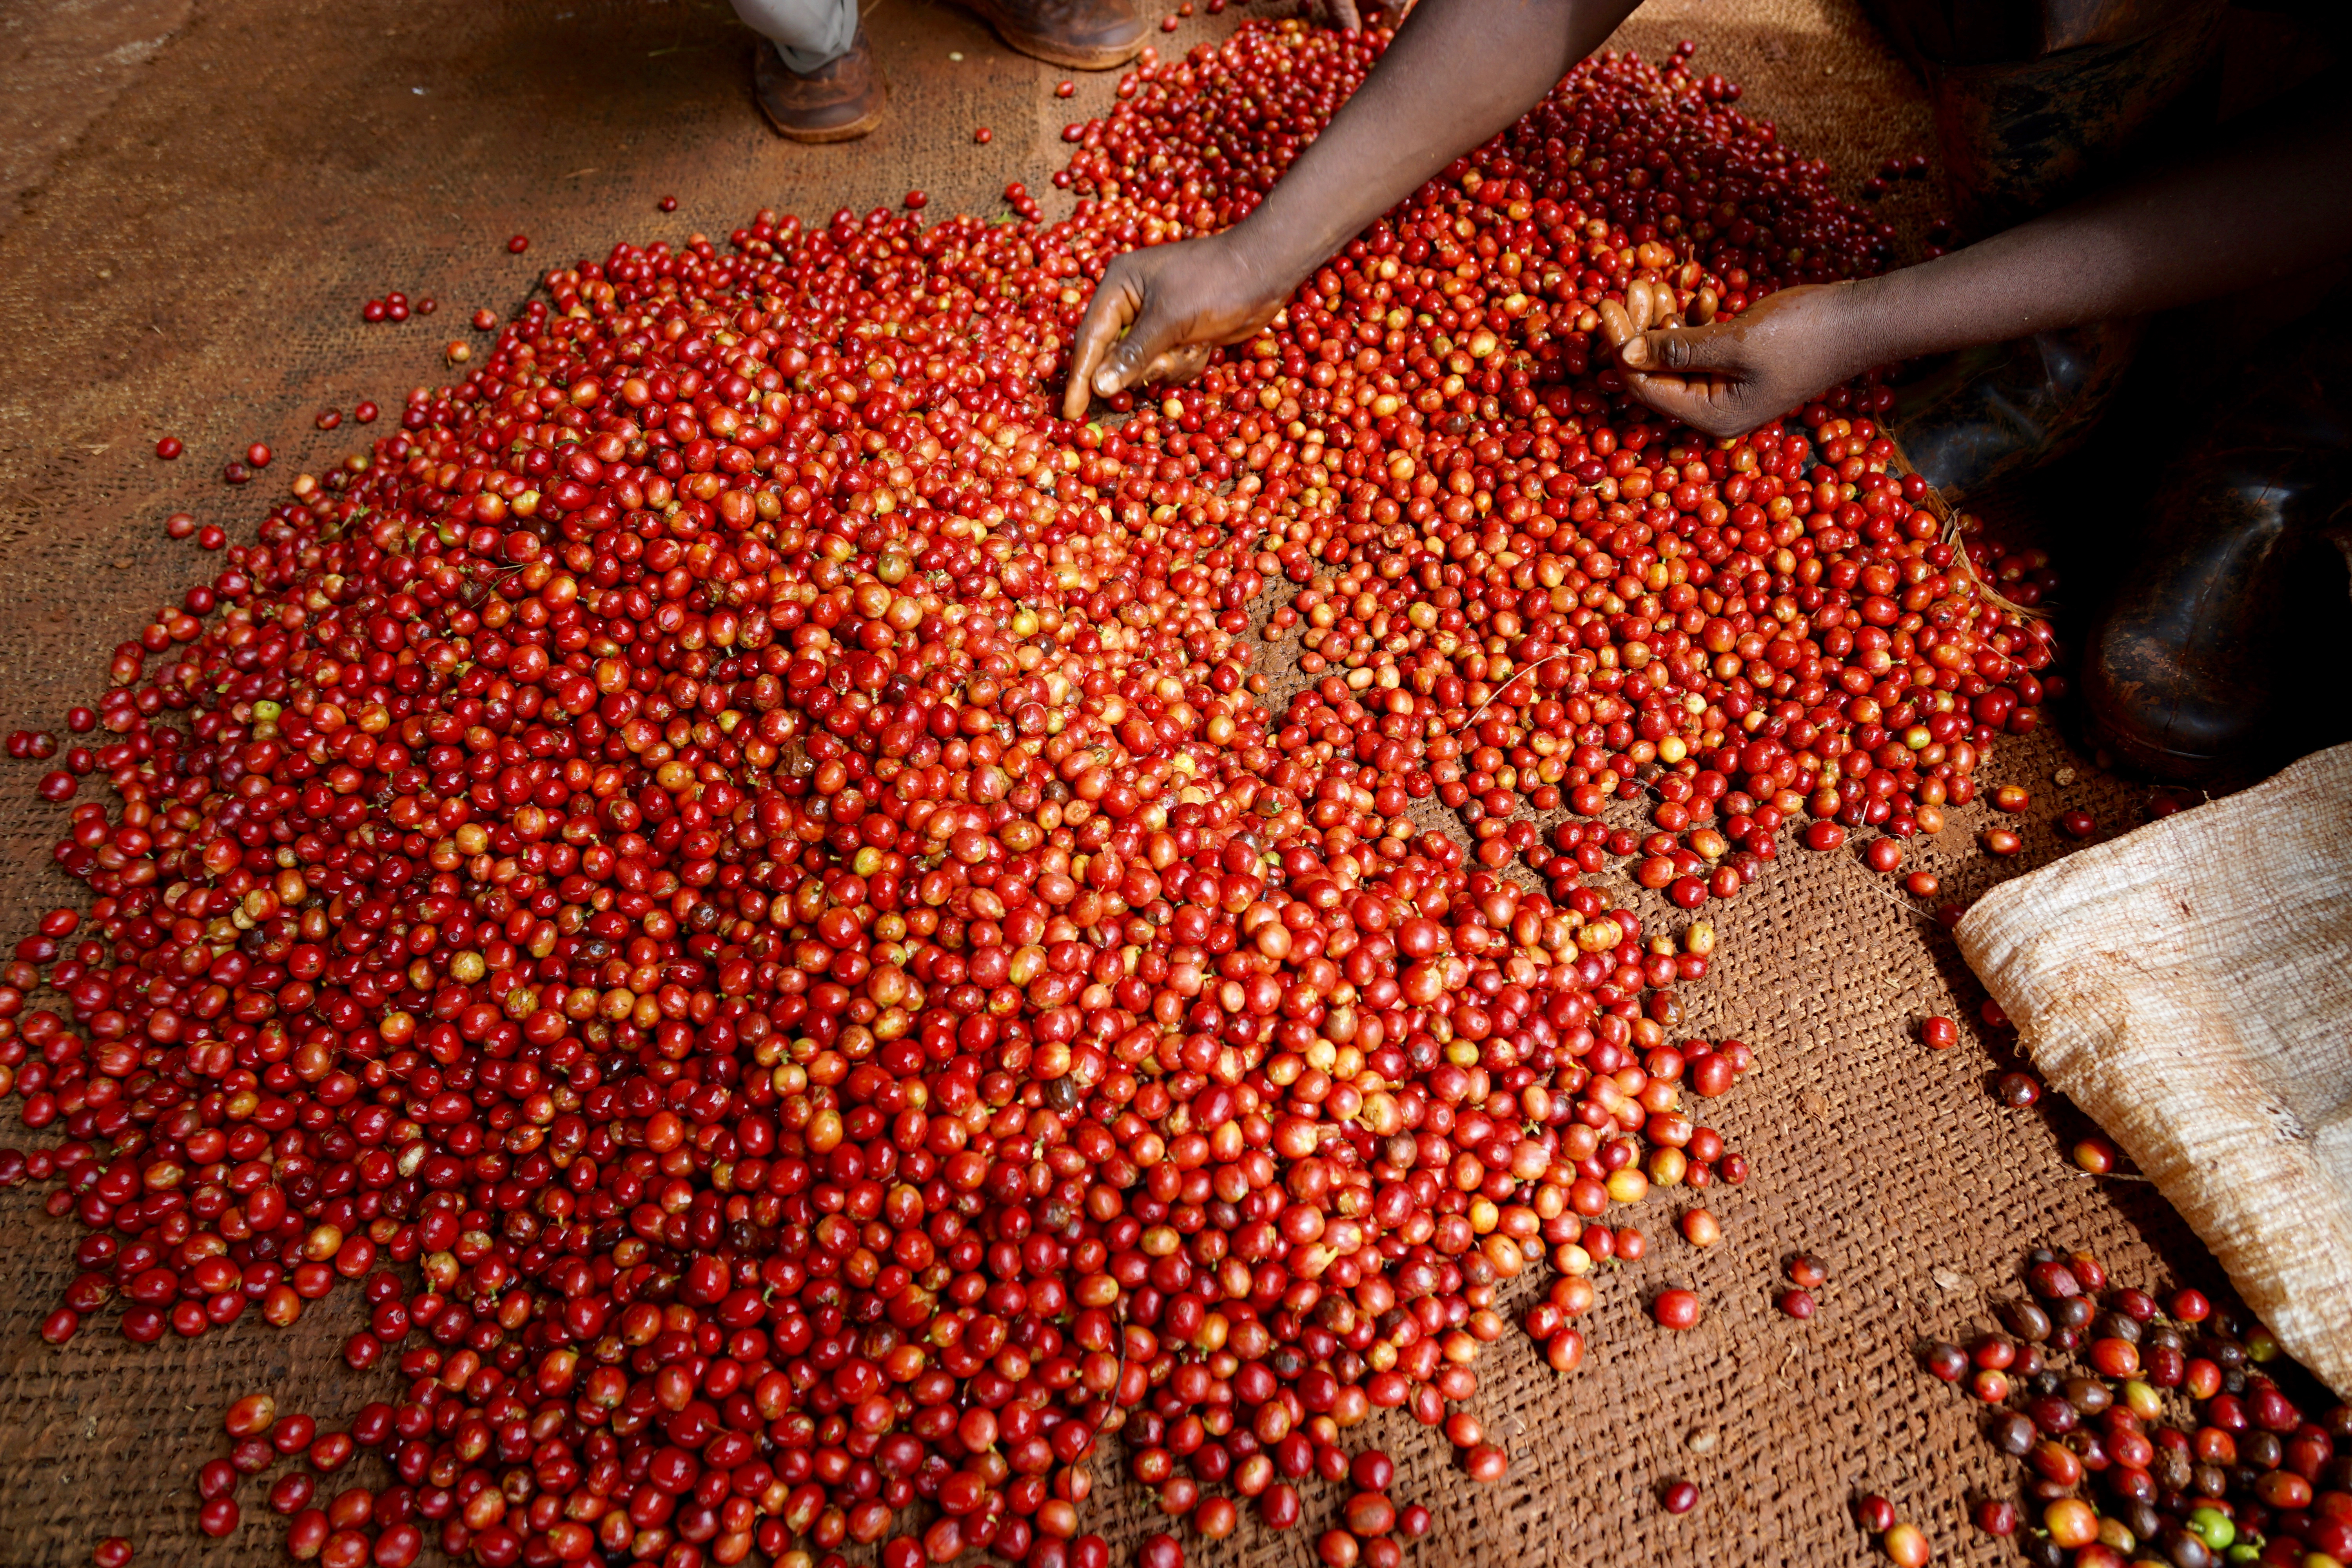 Hand sorting the coffee cherries